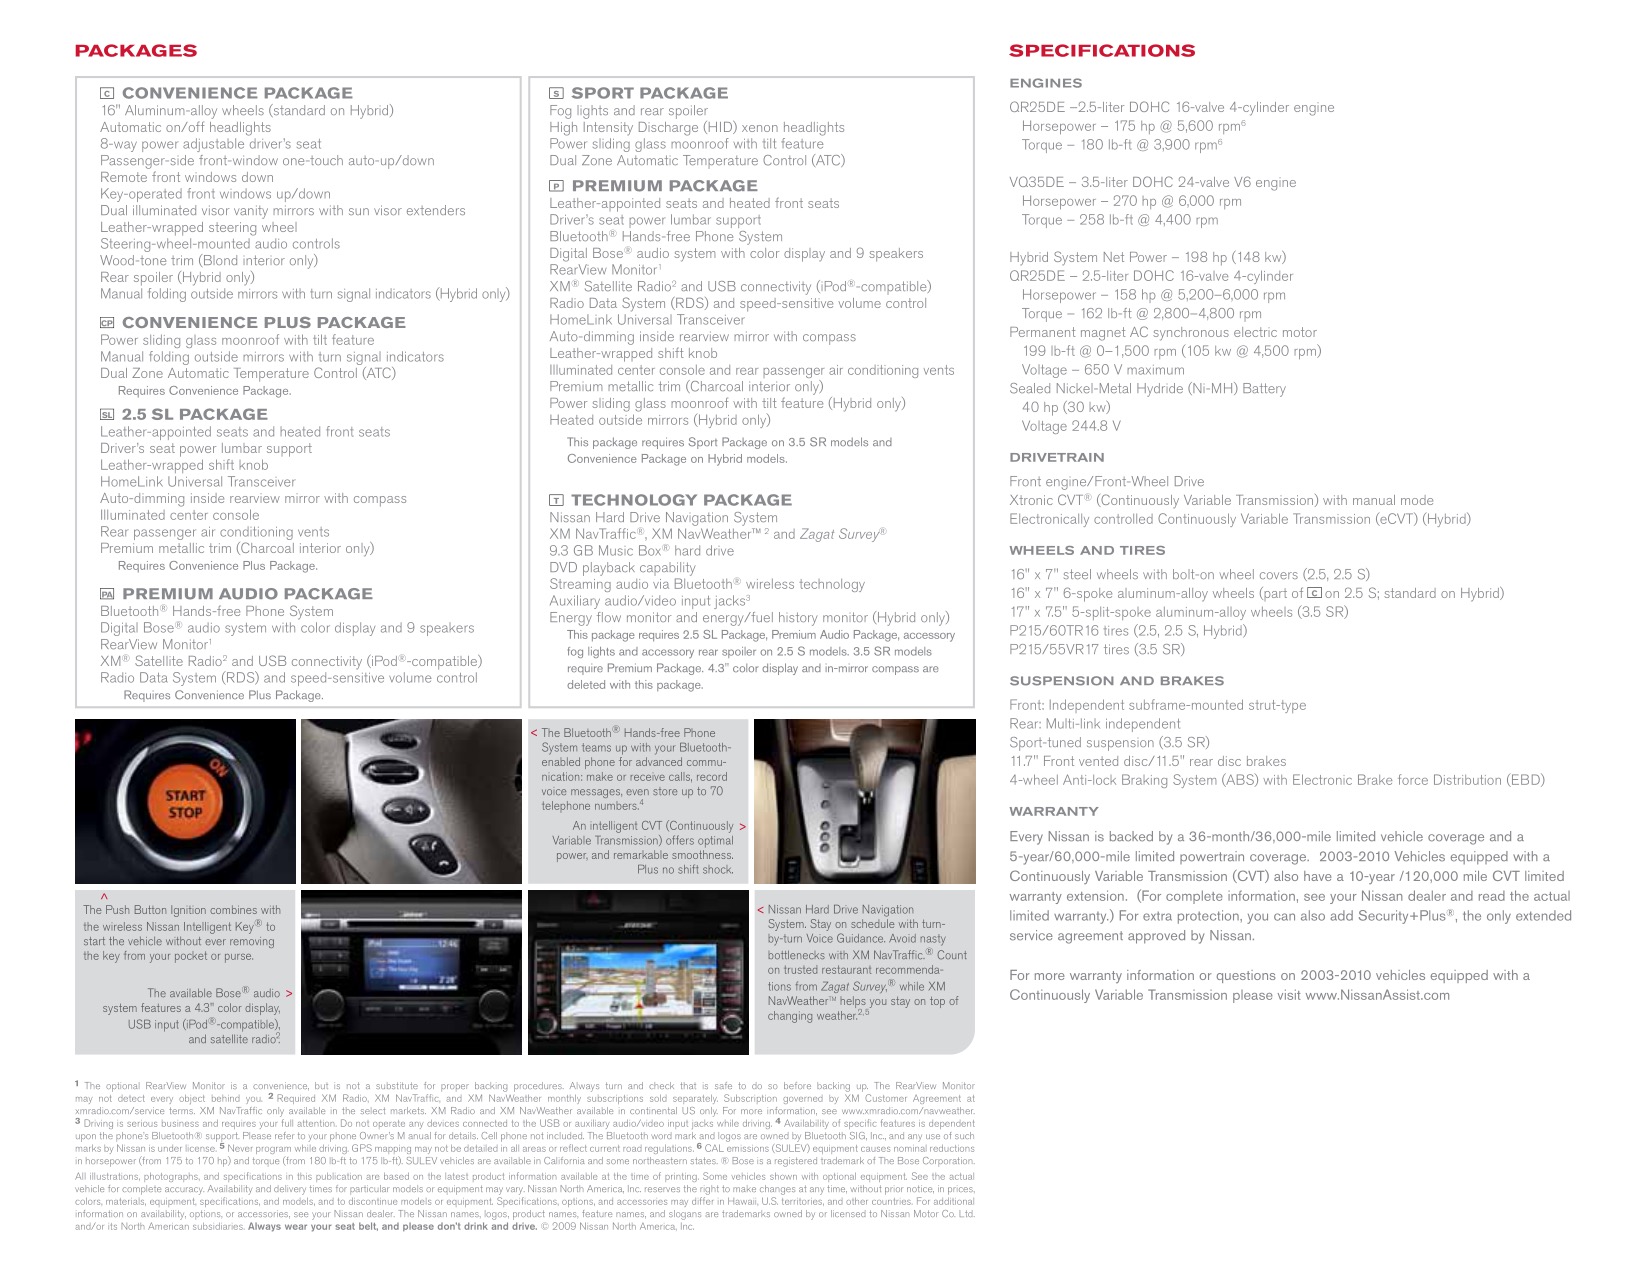 2010 Nissan Altima Brochure Page 3